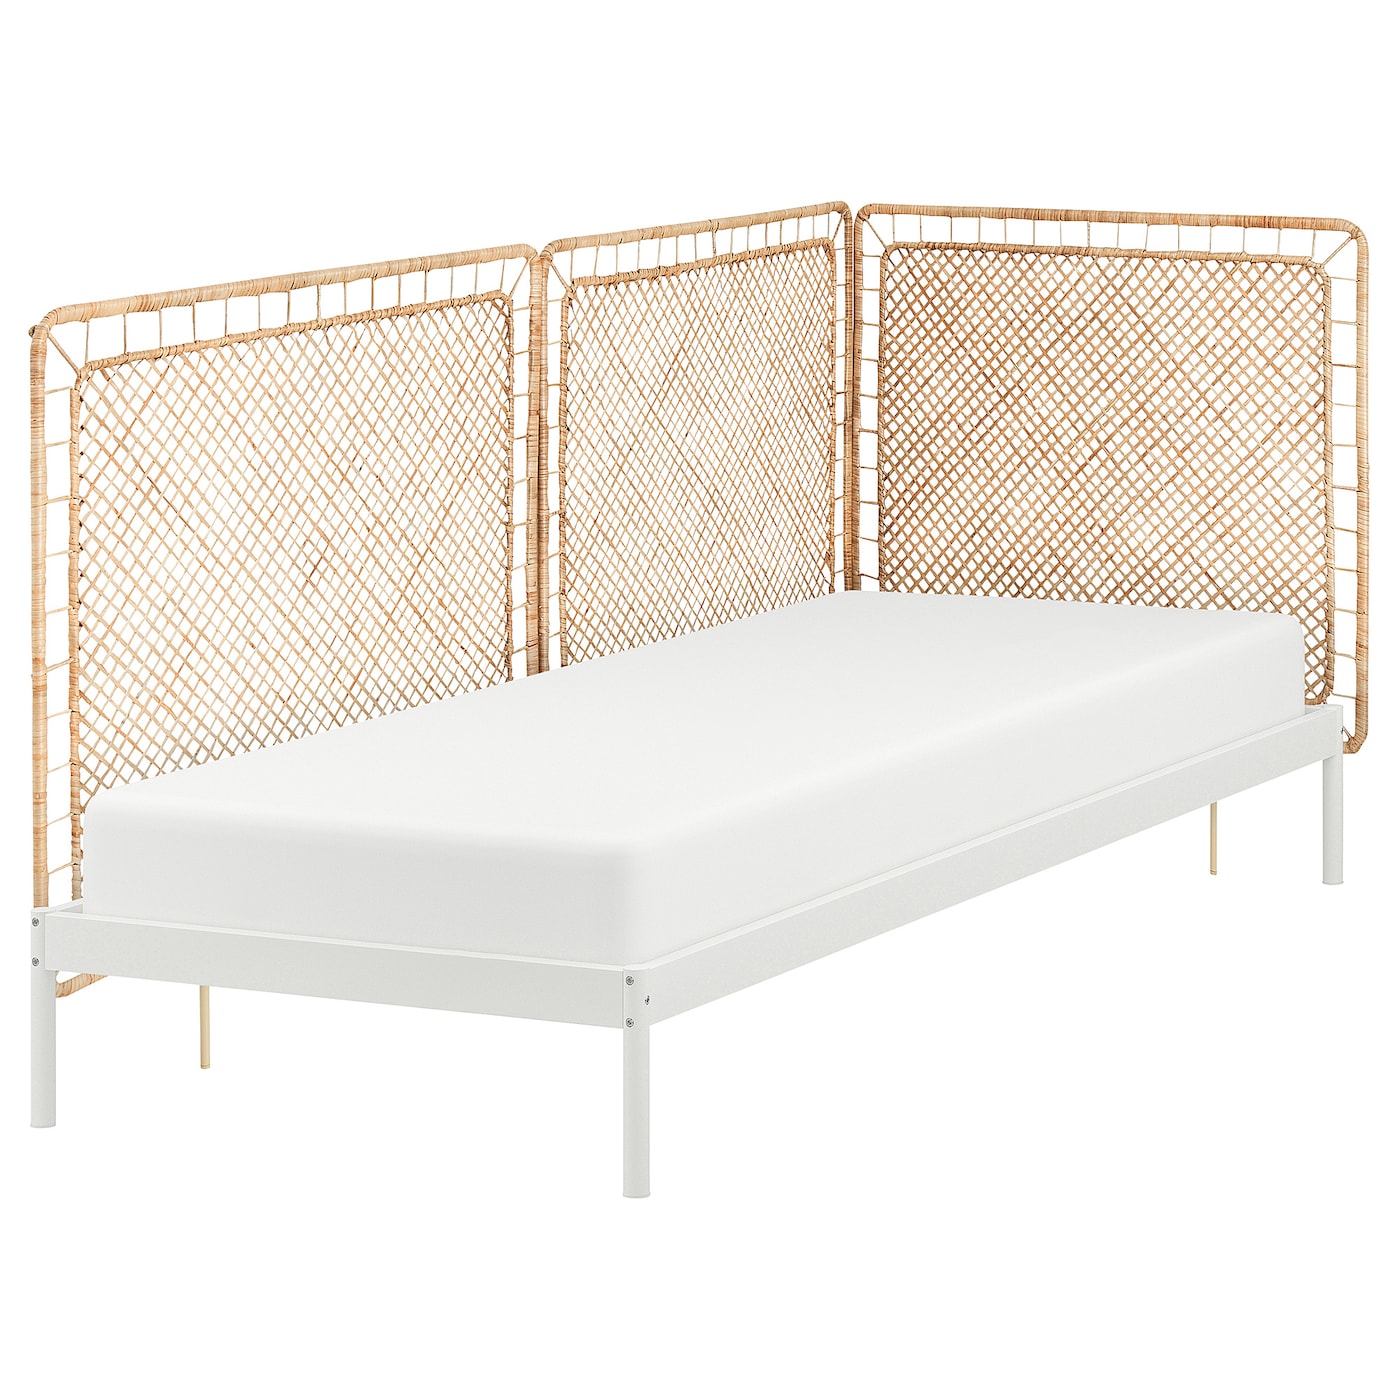 Каркас кровати с 3 изголовьями - IKEA VEVELSTAD, 200х90 см, белый, ВЕВЕЛСТАД ИКЕА